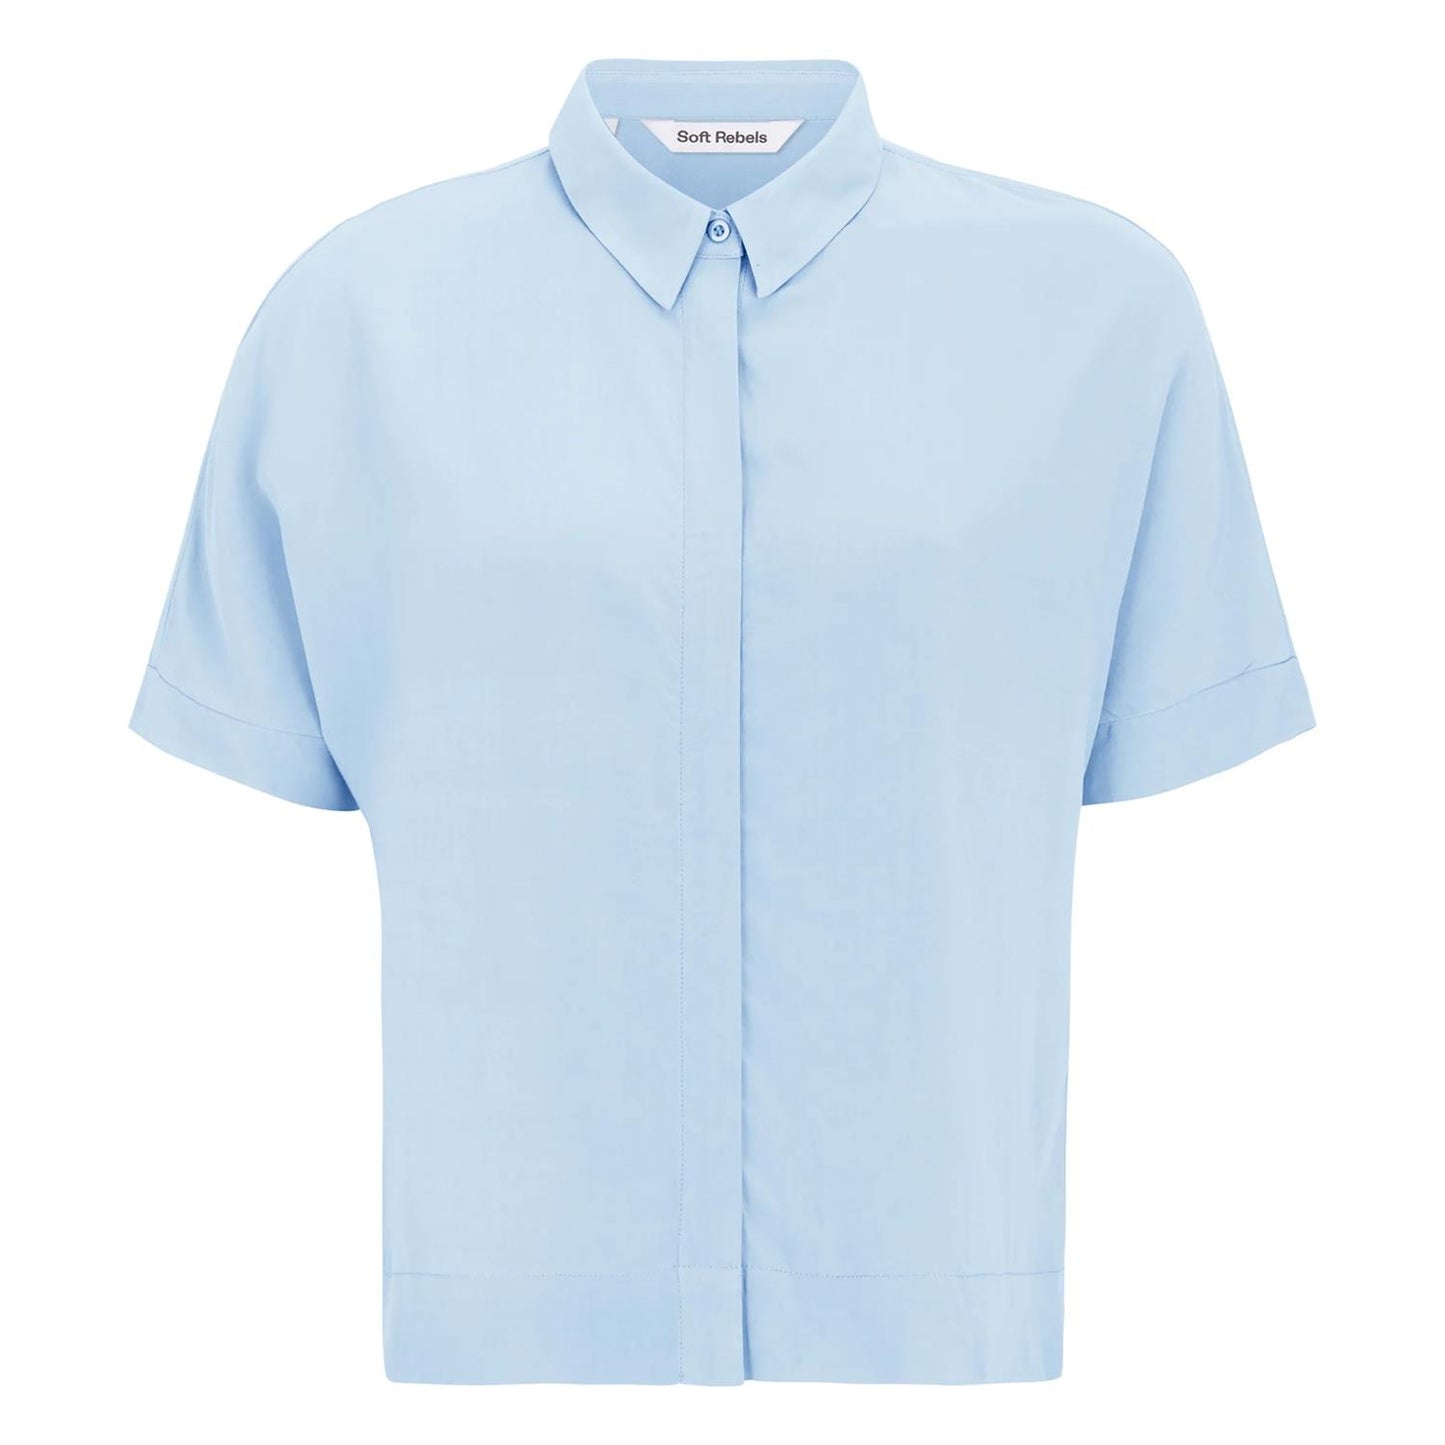 SRFreedom SS Shirt-cashmere blue